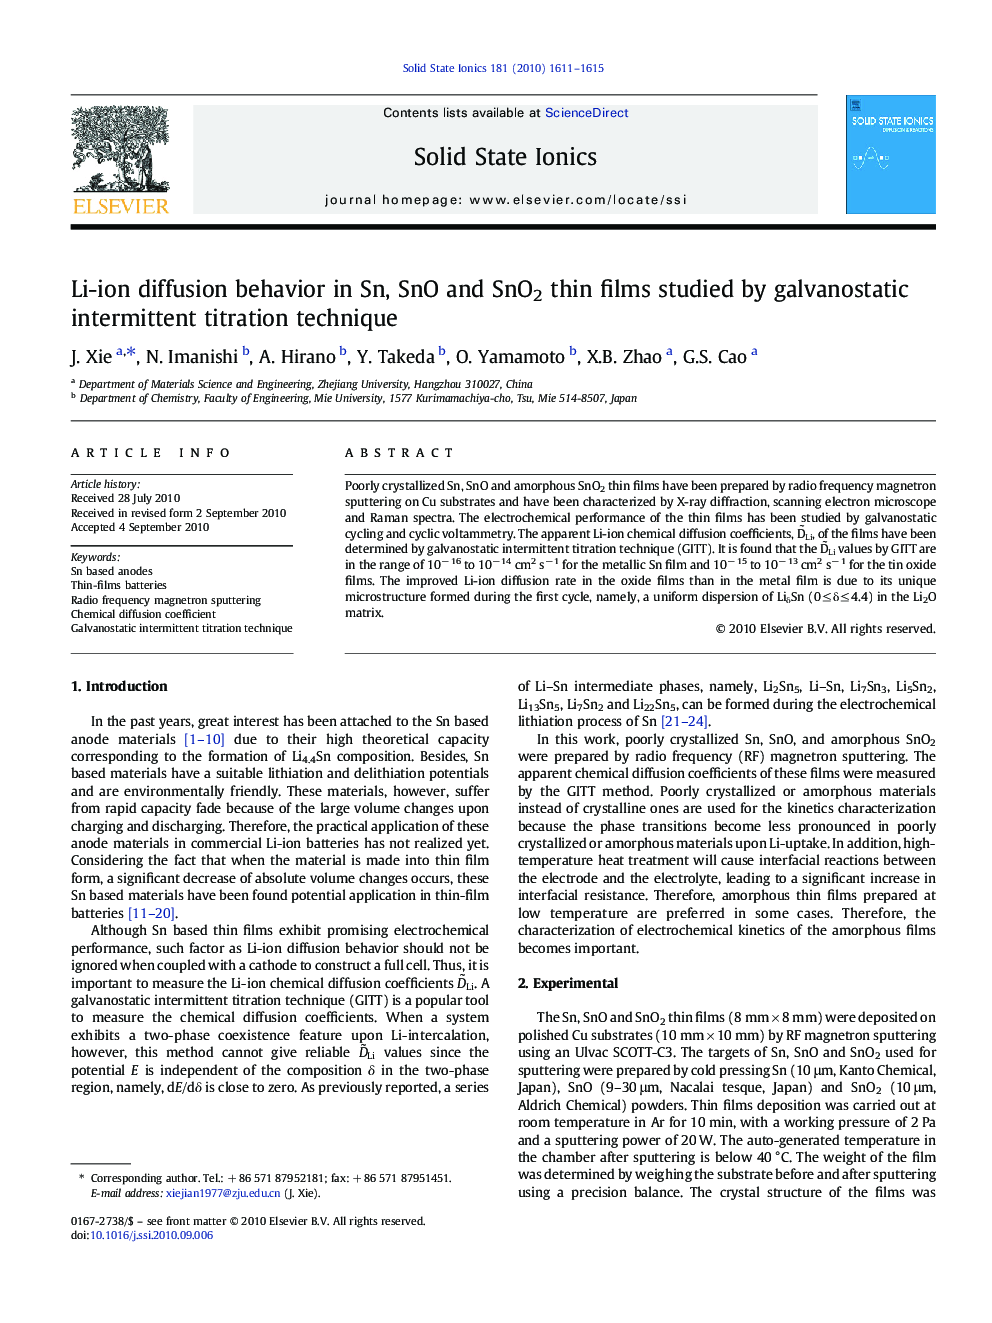 Li-ion diffusion behavior in Sn, SnO and SnO2 thin films studied by galvanostatic intermittent titration technique